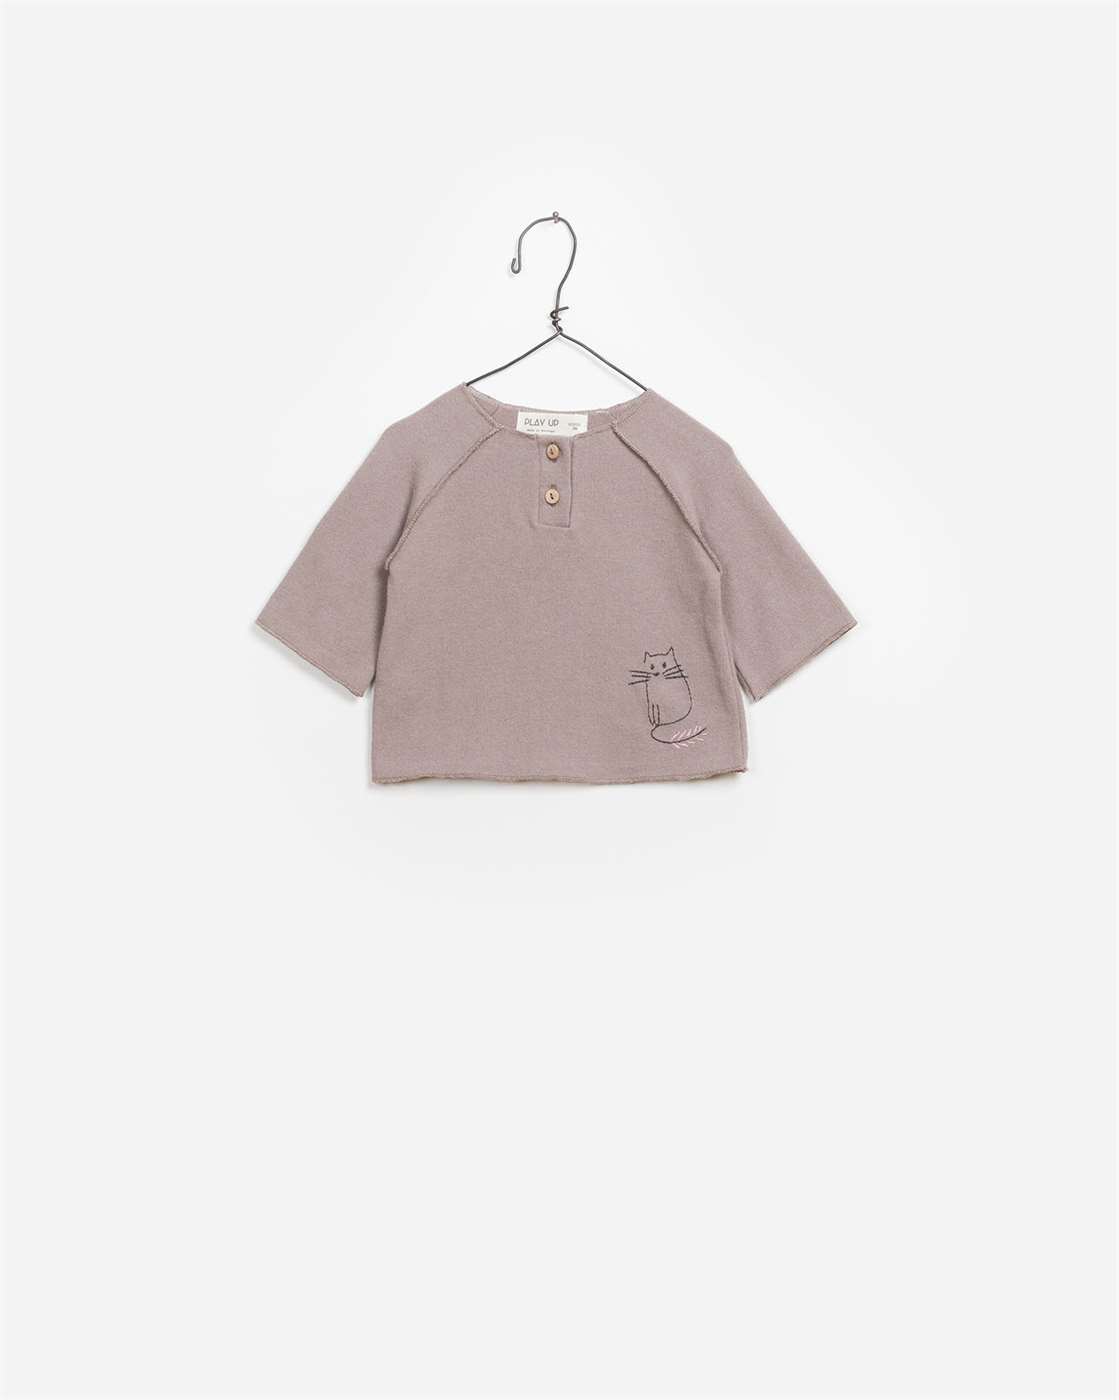 BeeBoo|BeeBoo PlayUp vêtement bébé baby cloth haut top interlock gris grey